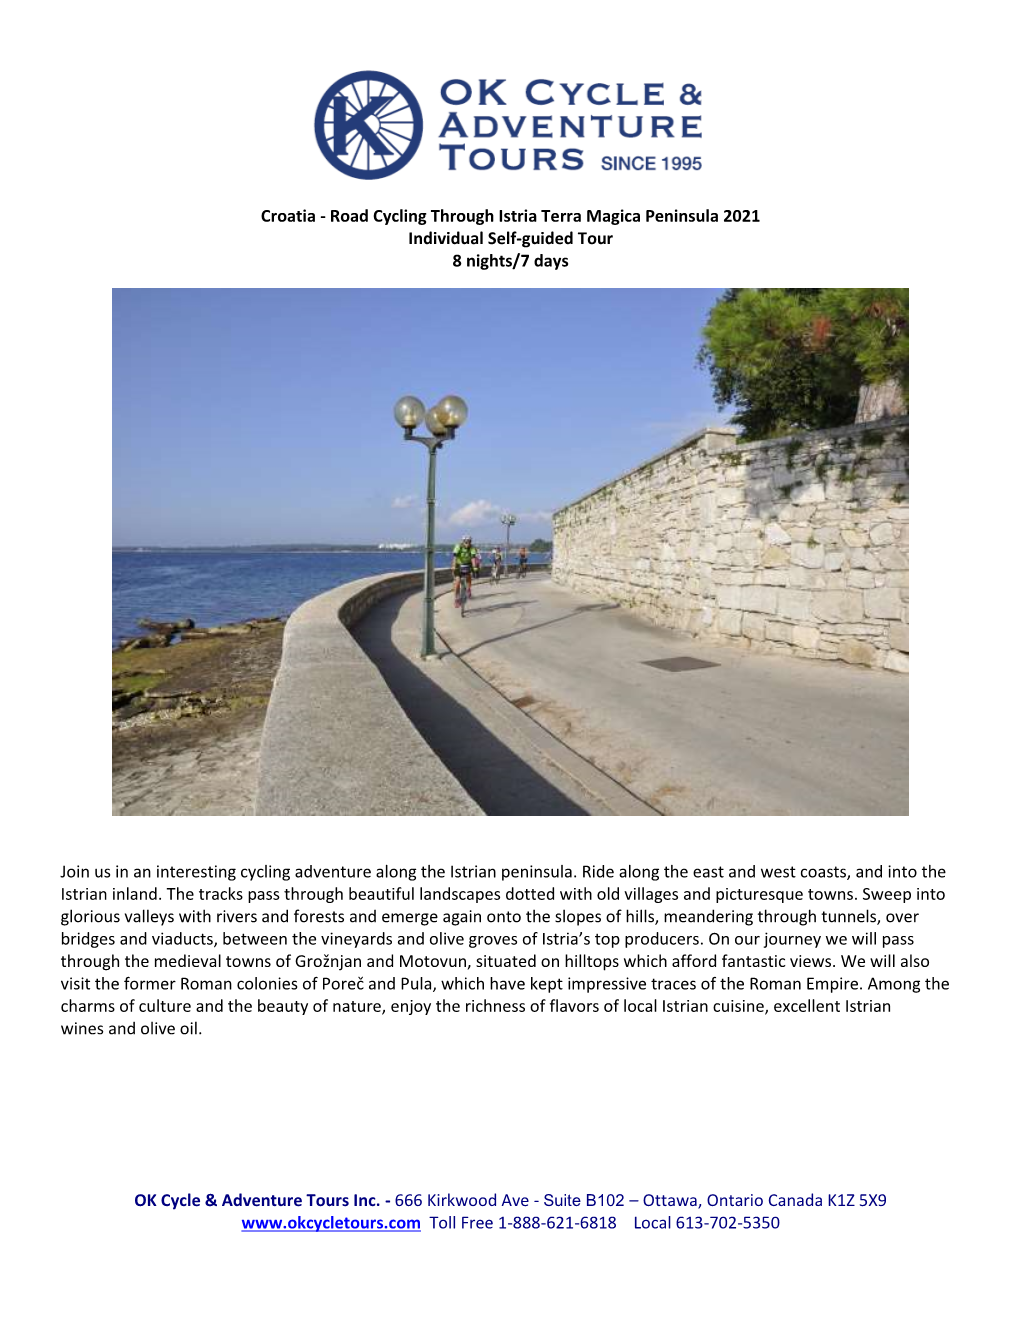 Croatia - Road Cycling Through Istria Terra Magica Peninsula 2021 Individual Self-Guided Tour 8 Nights/7 Days